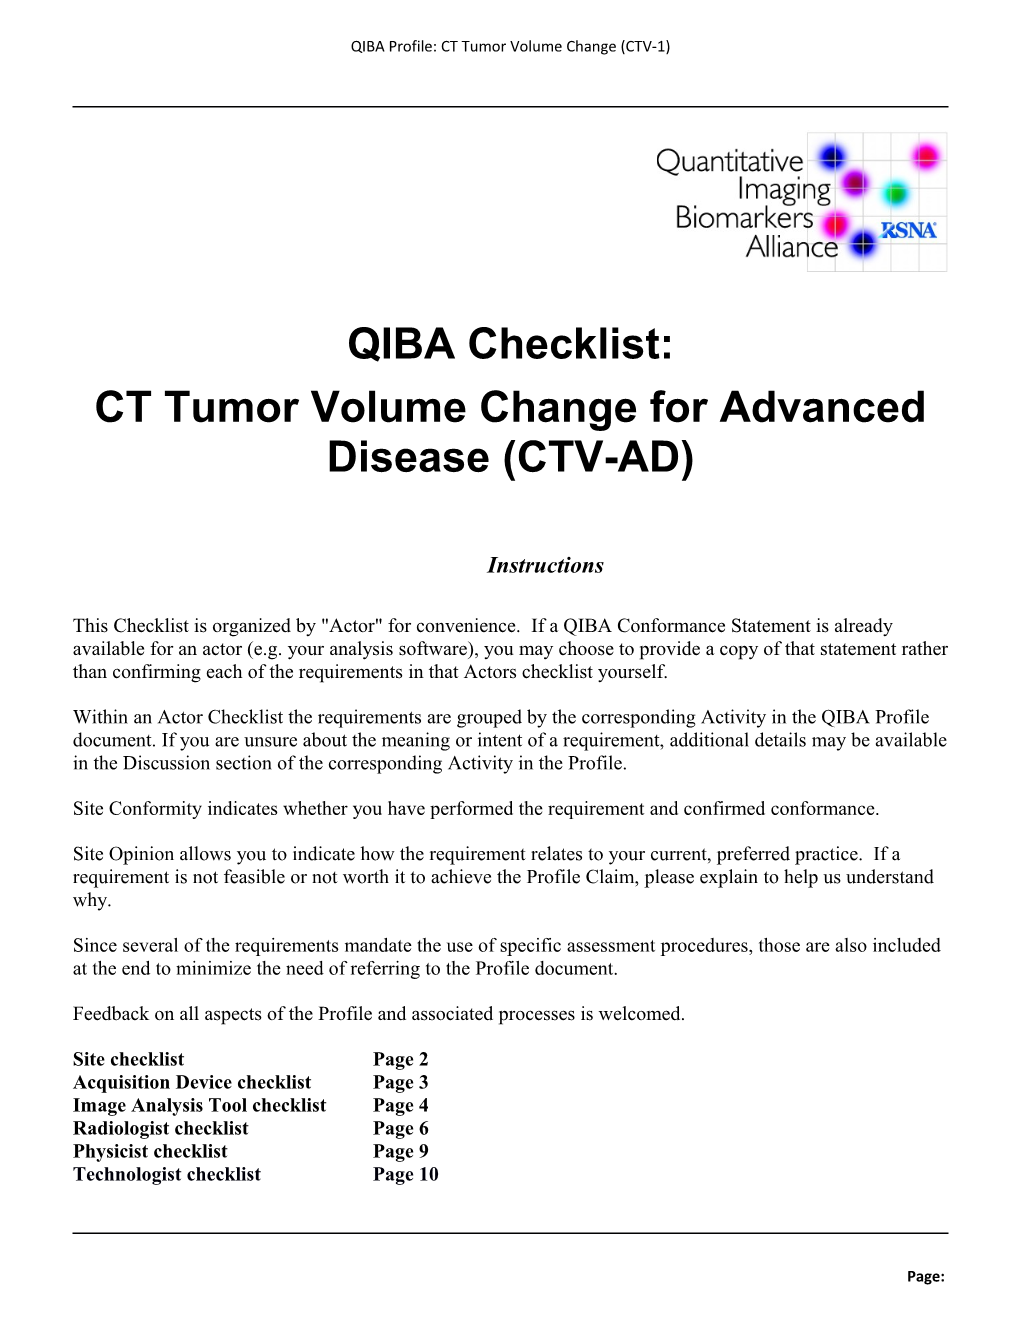 CT Tumor Volume Change for Advanced Disease (CTV-AD)